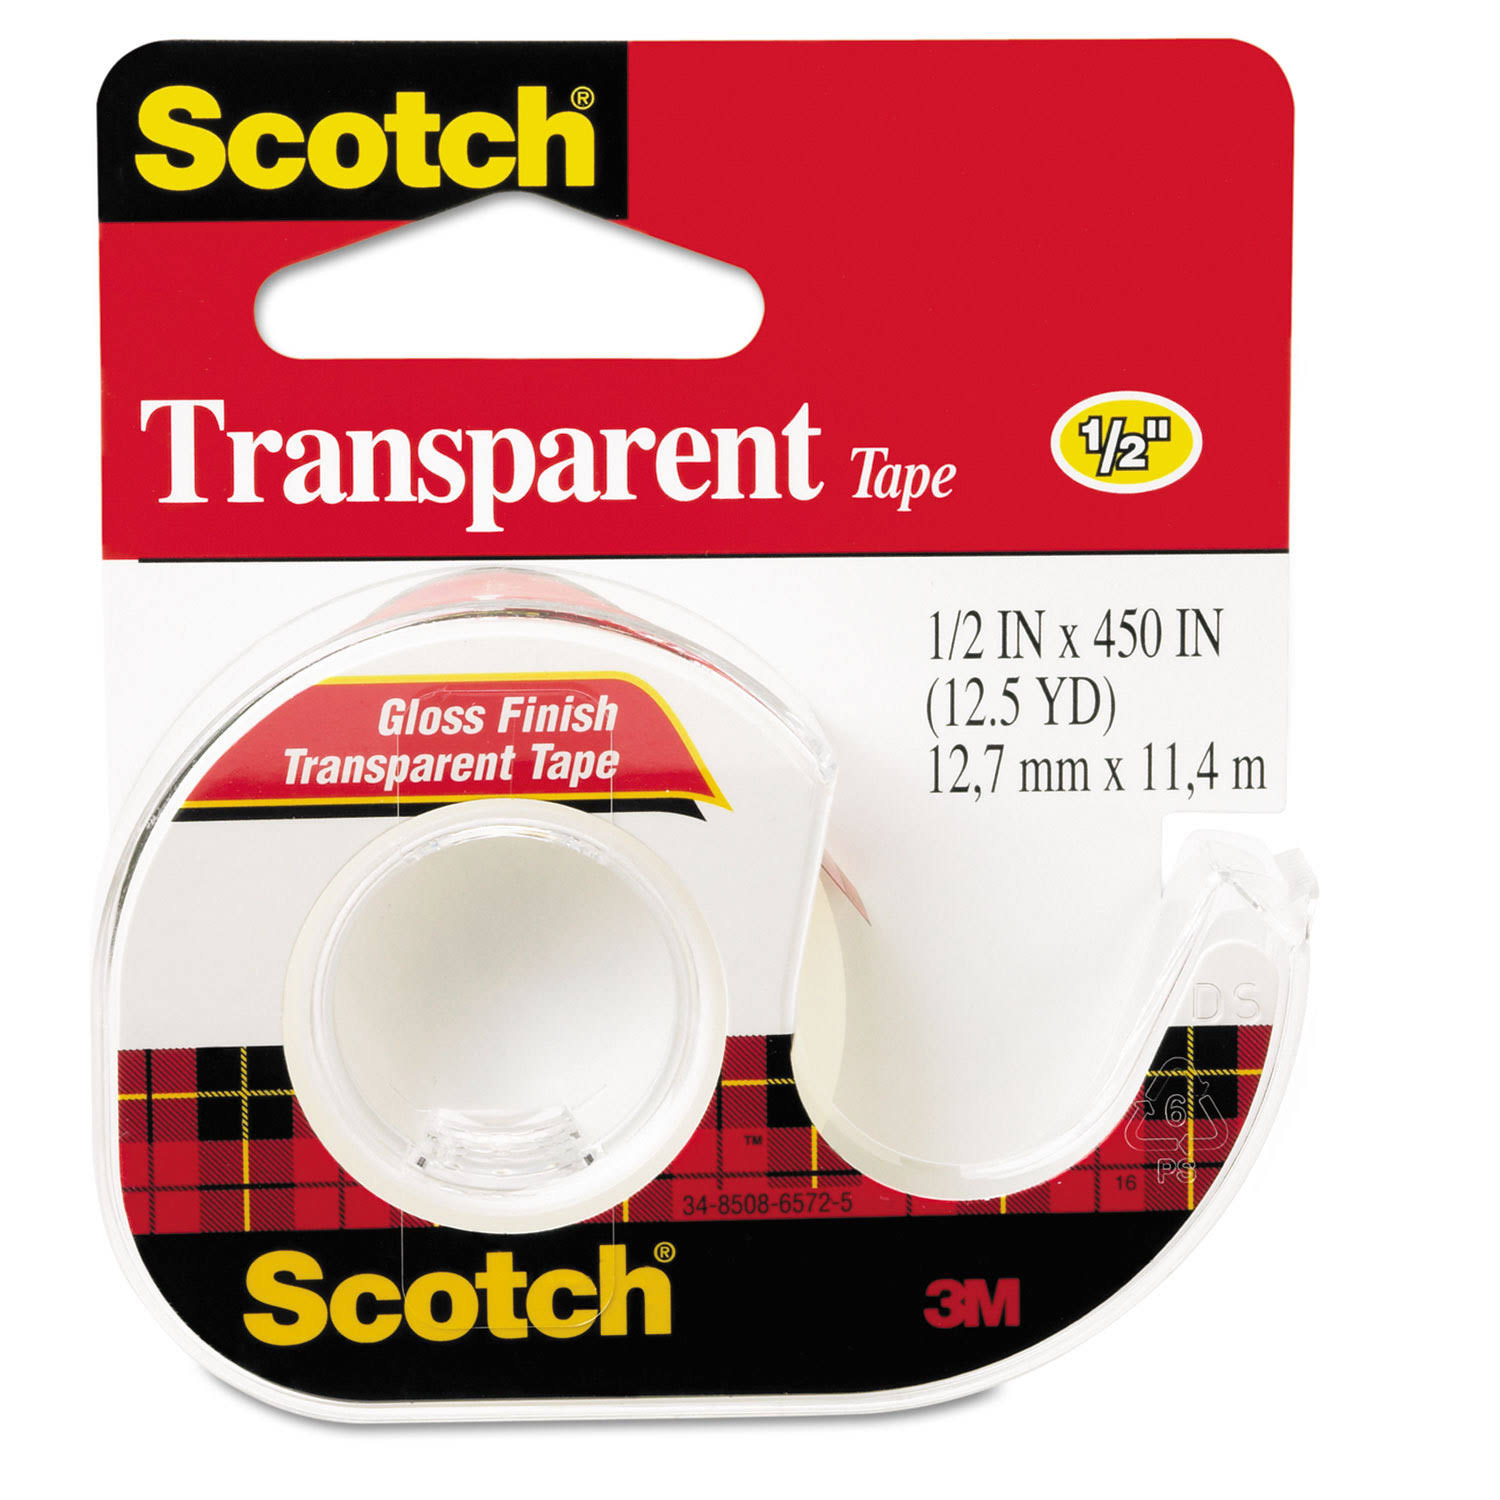 Scotch Transparent Tape - 1/2"